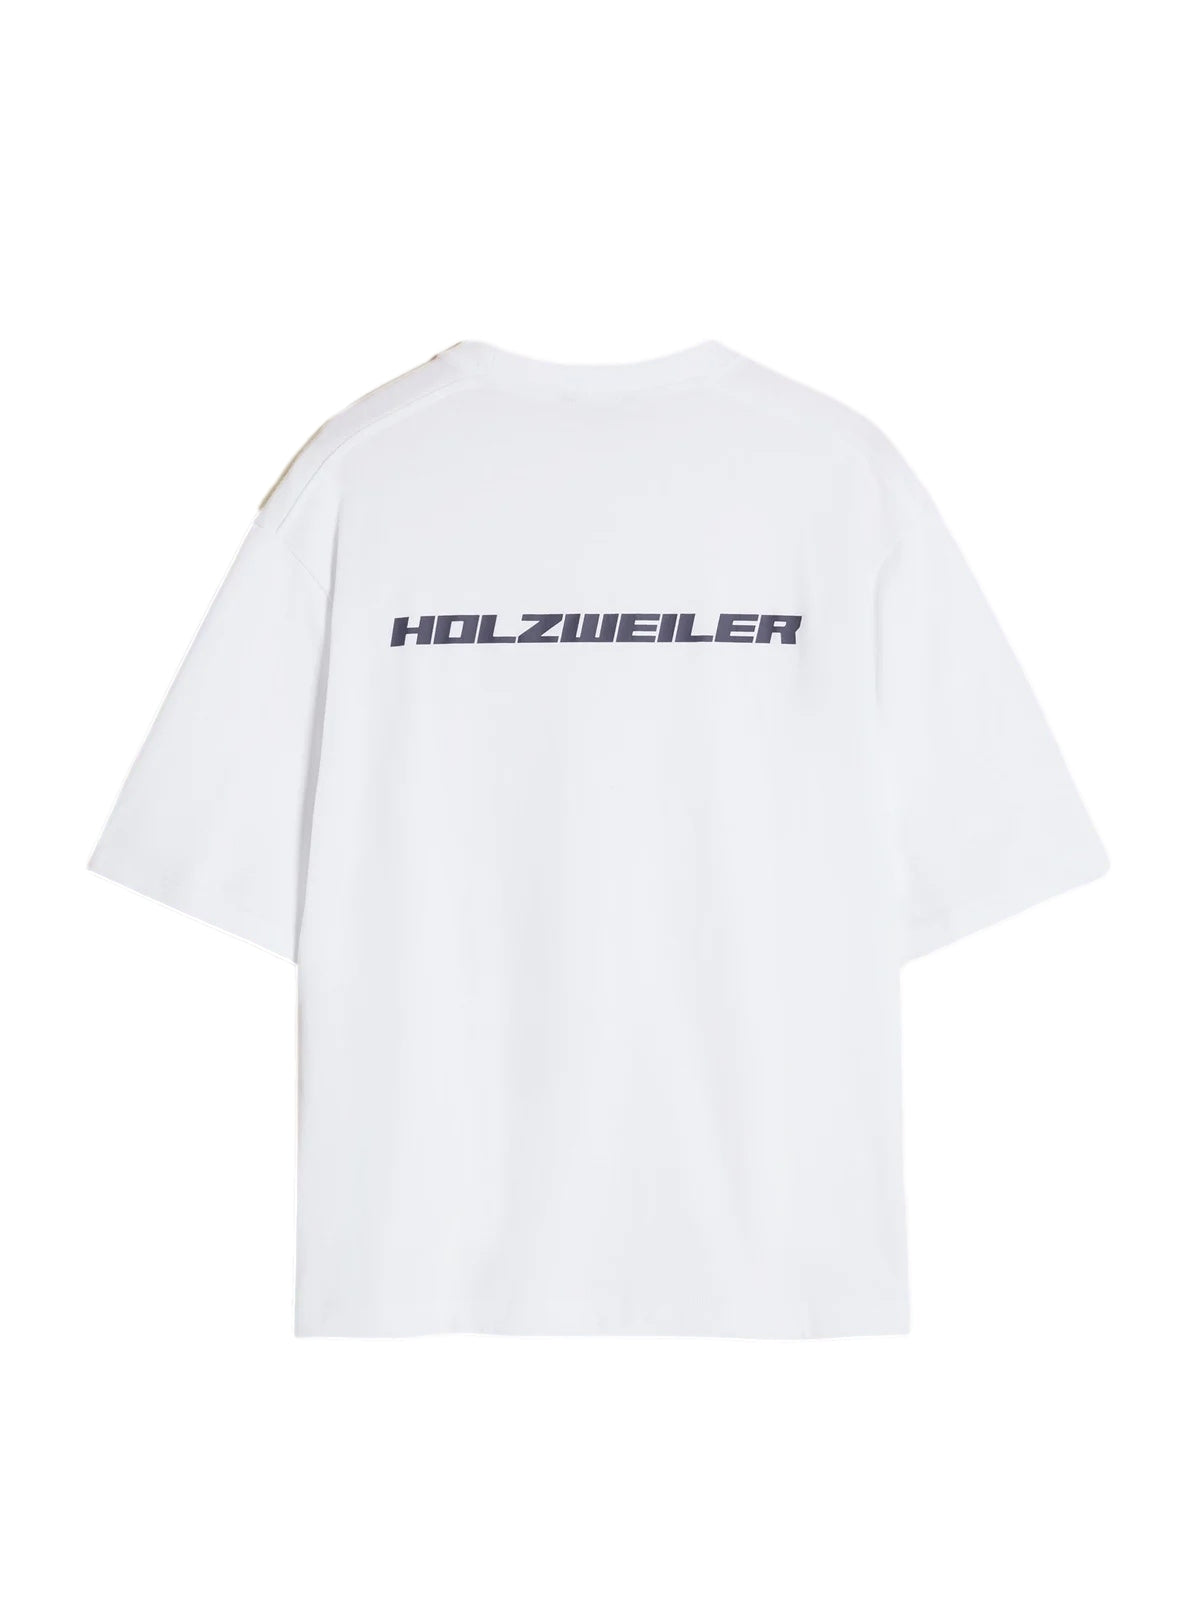 Holzweiler Ranger Tee T-shirt Hvit - [modostore.no]